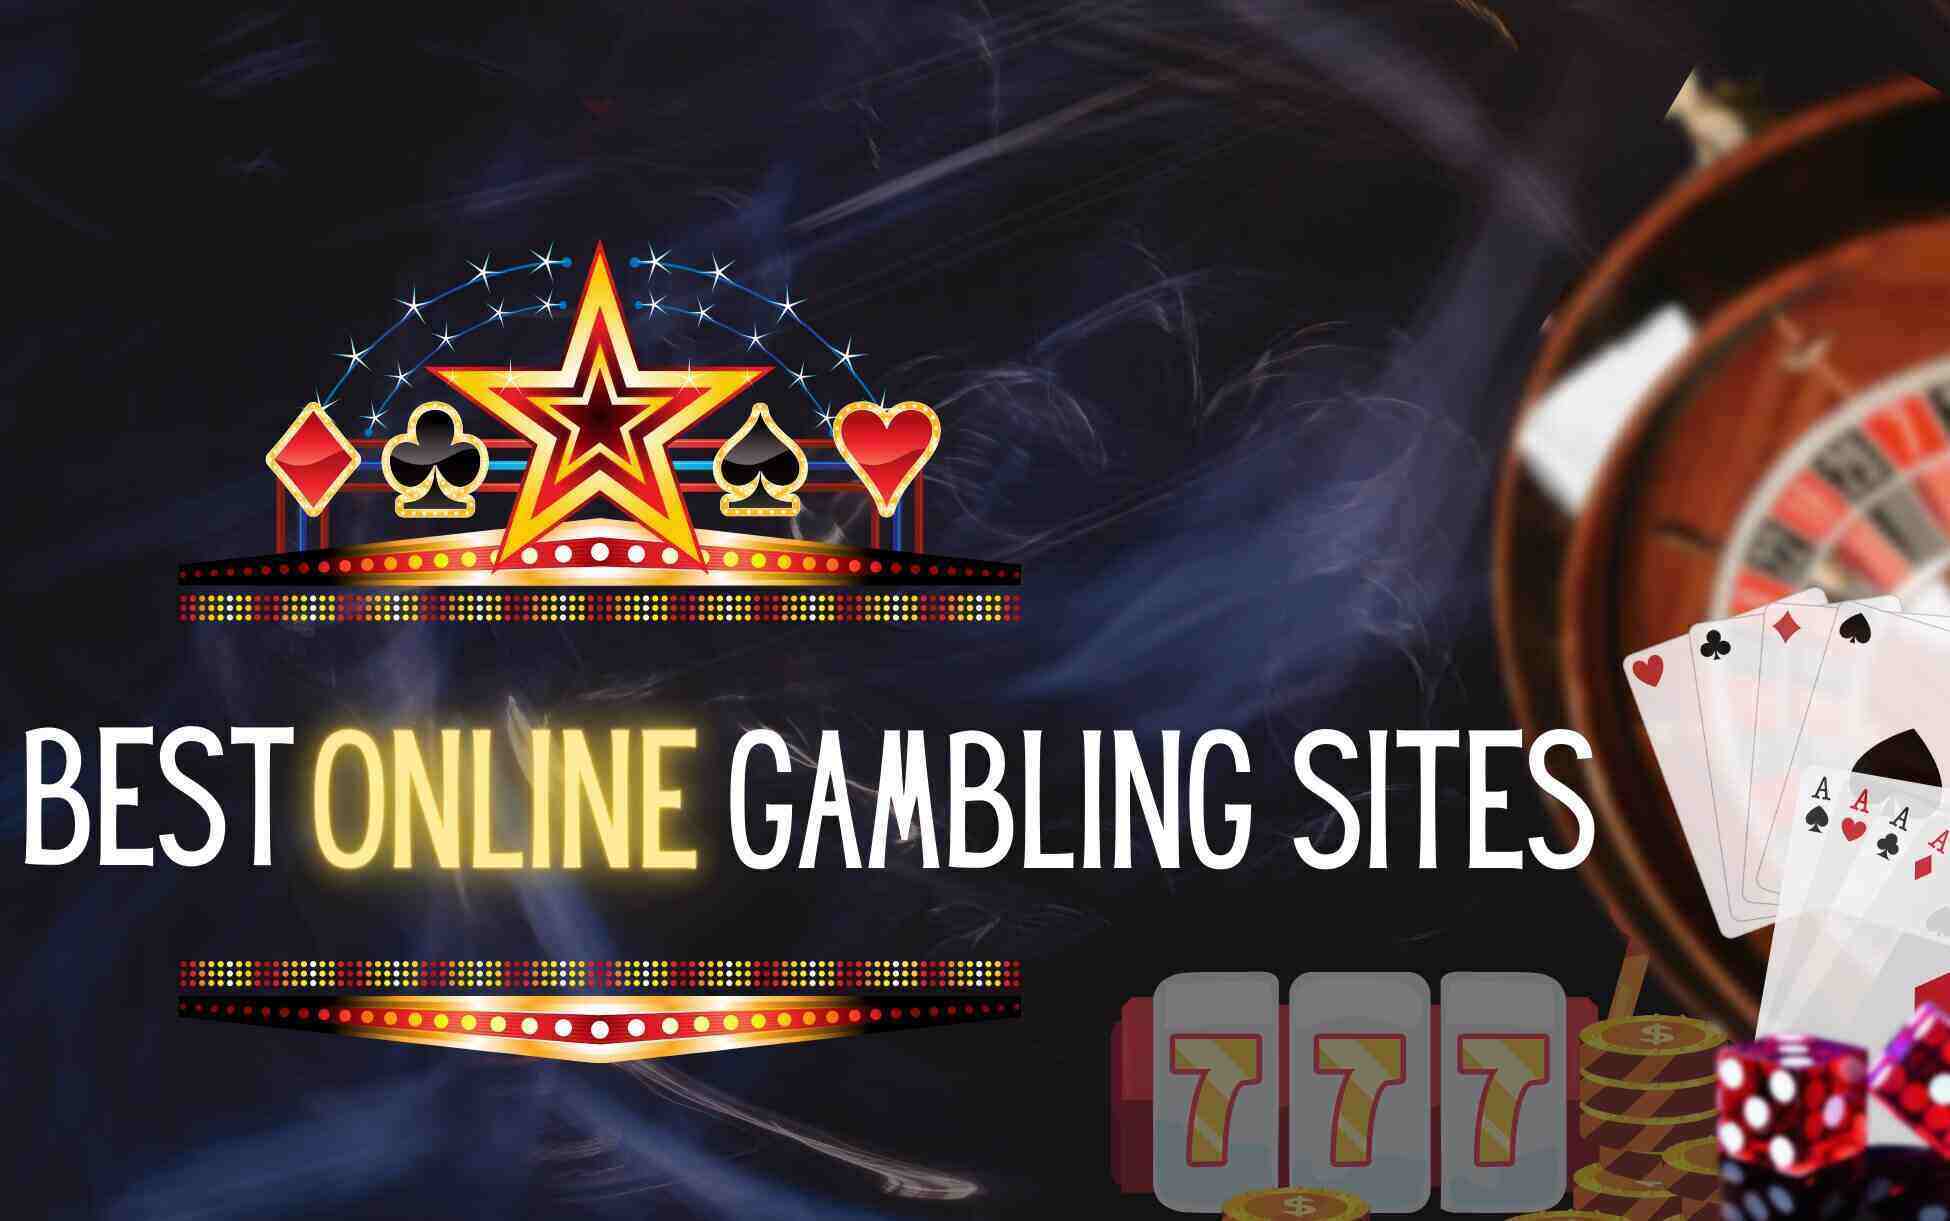 casinos Promotion 101